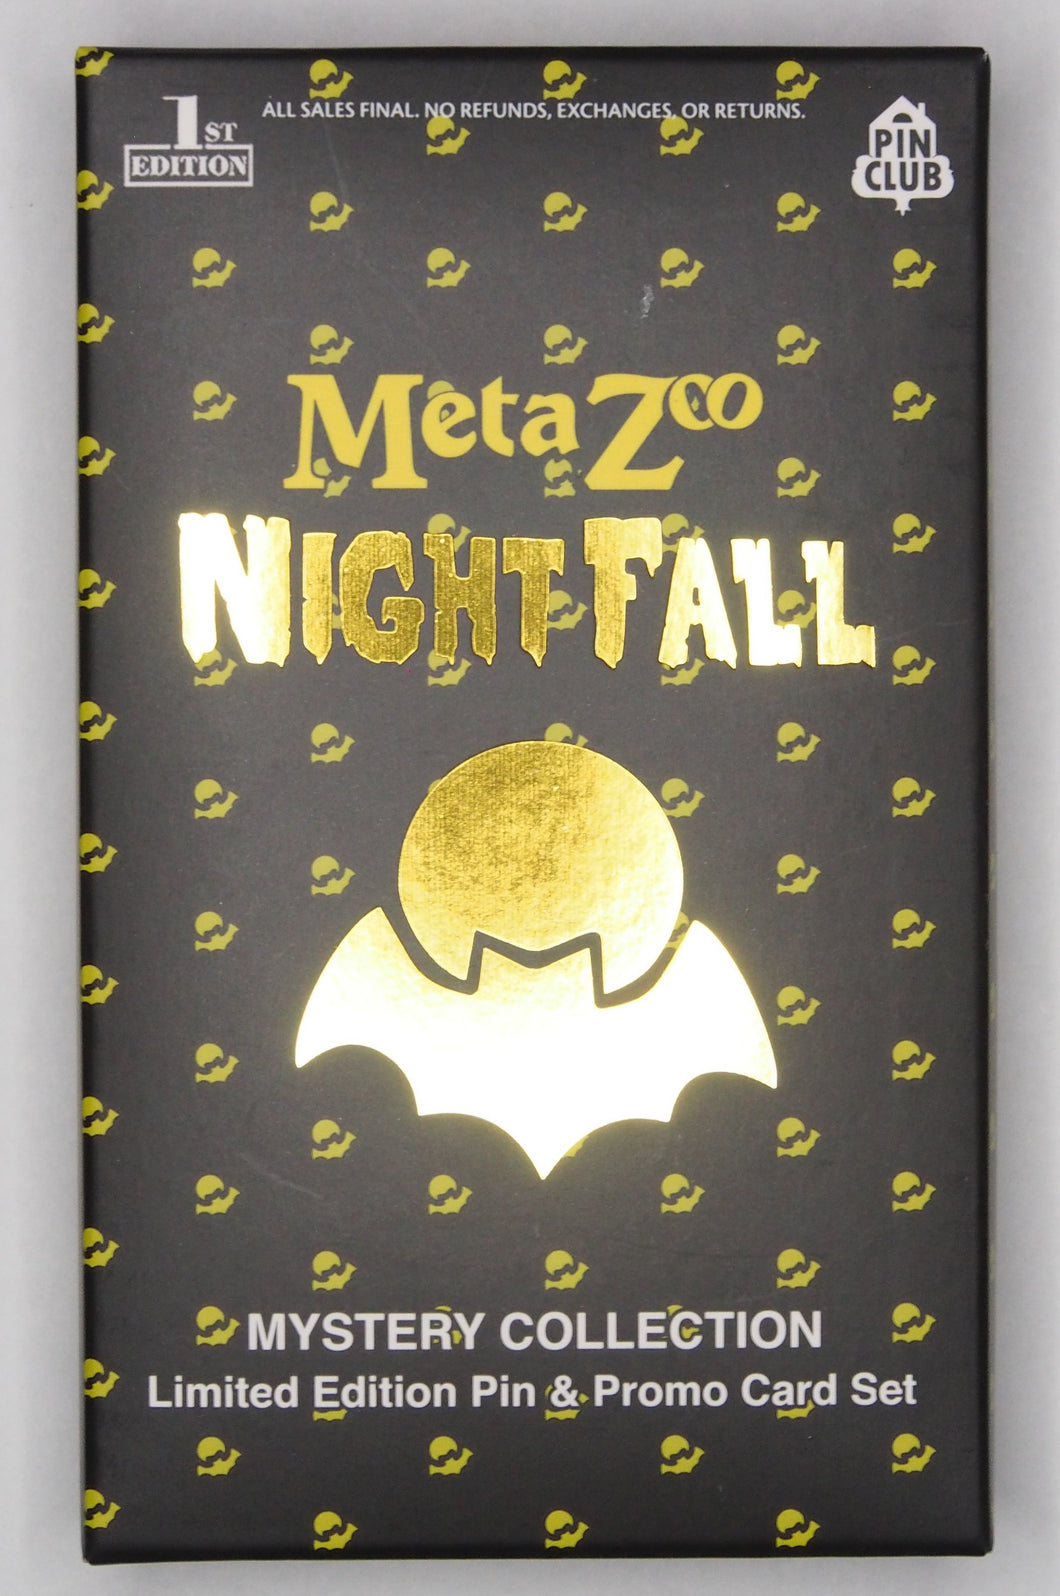 MetaZoo NightFall Mystery Collection